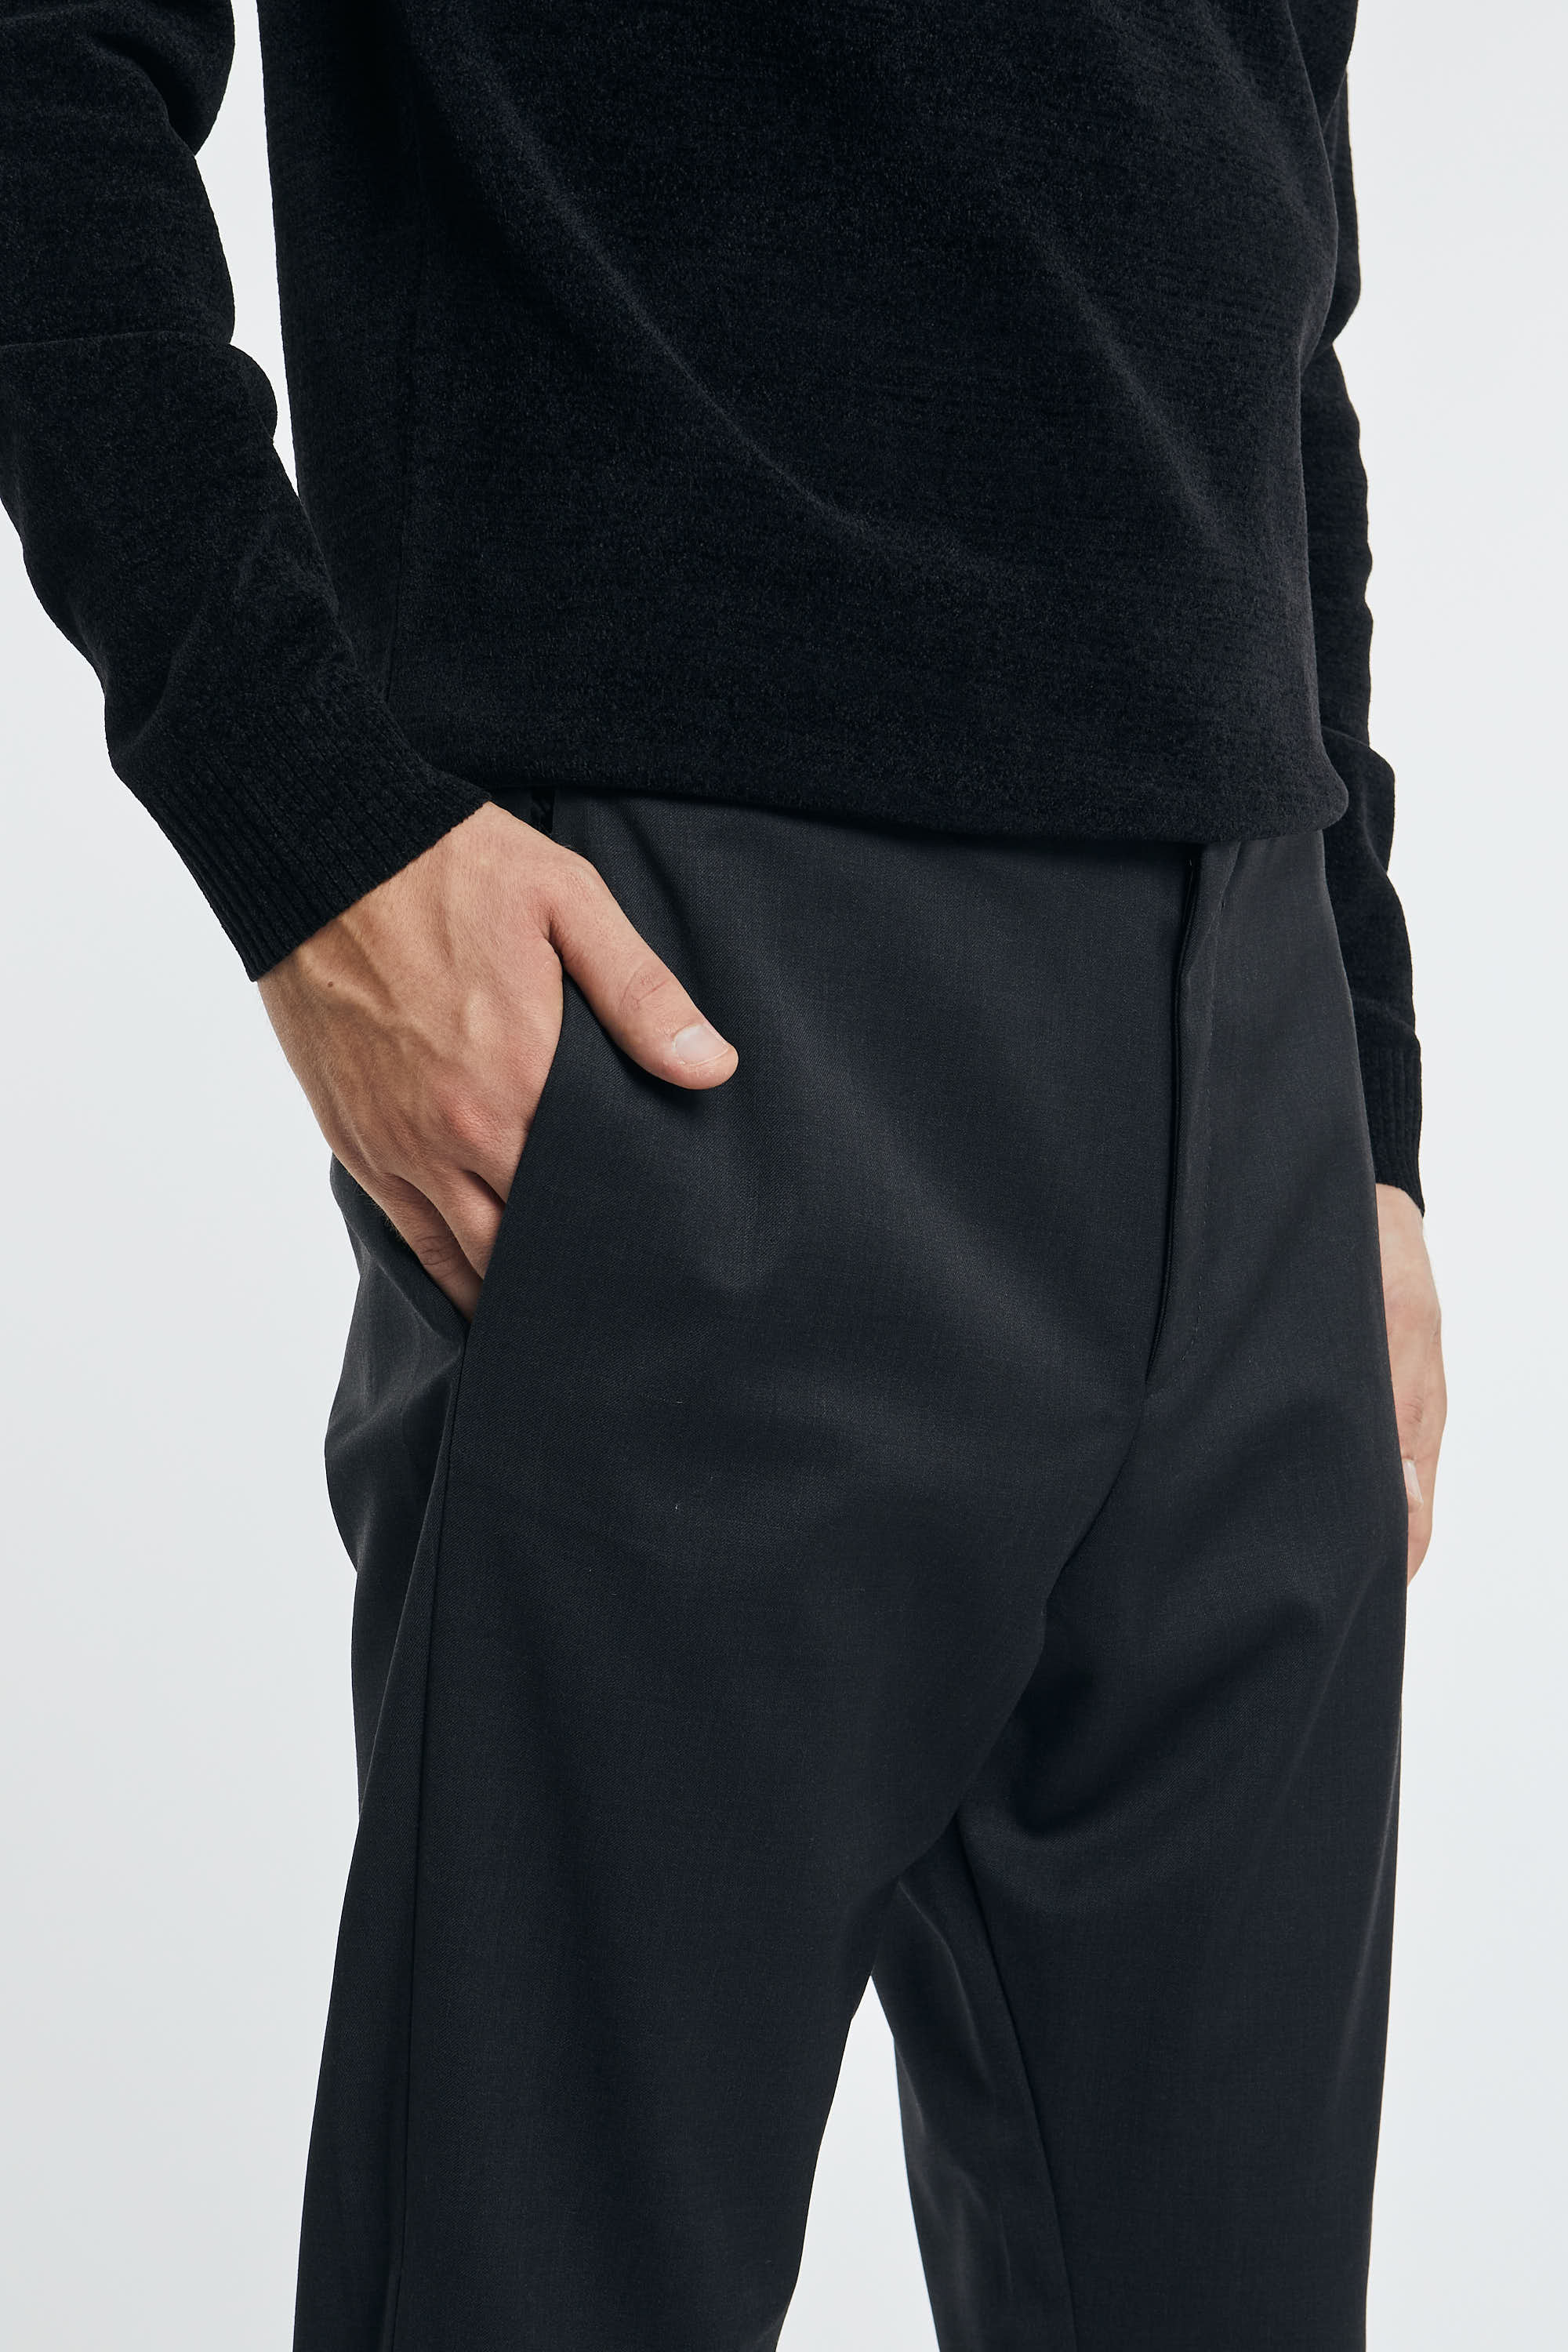 RRD Ultrafine Wool Terzilio Pants with Elastane Lead Grey-3